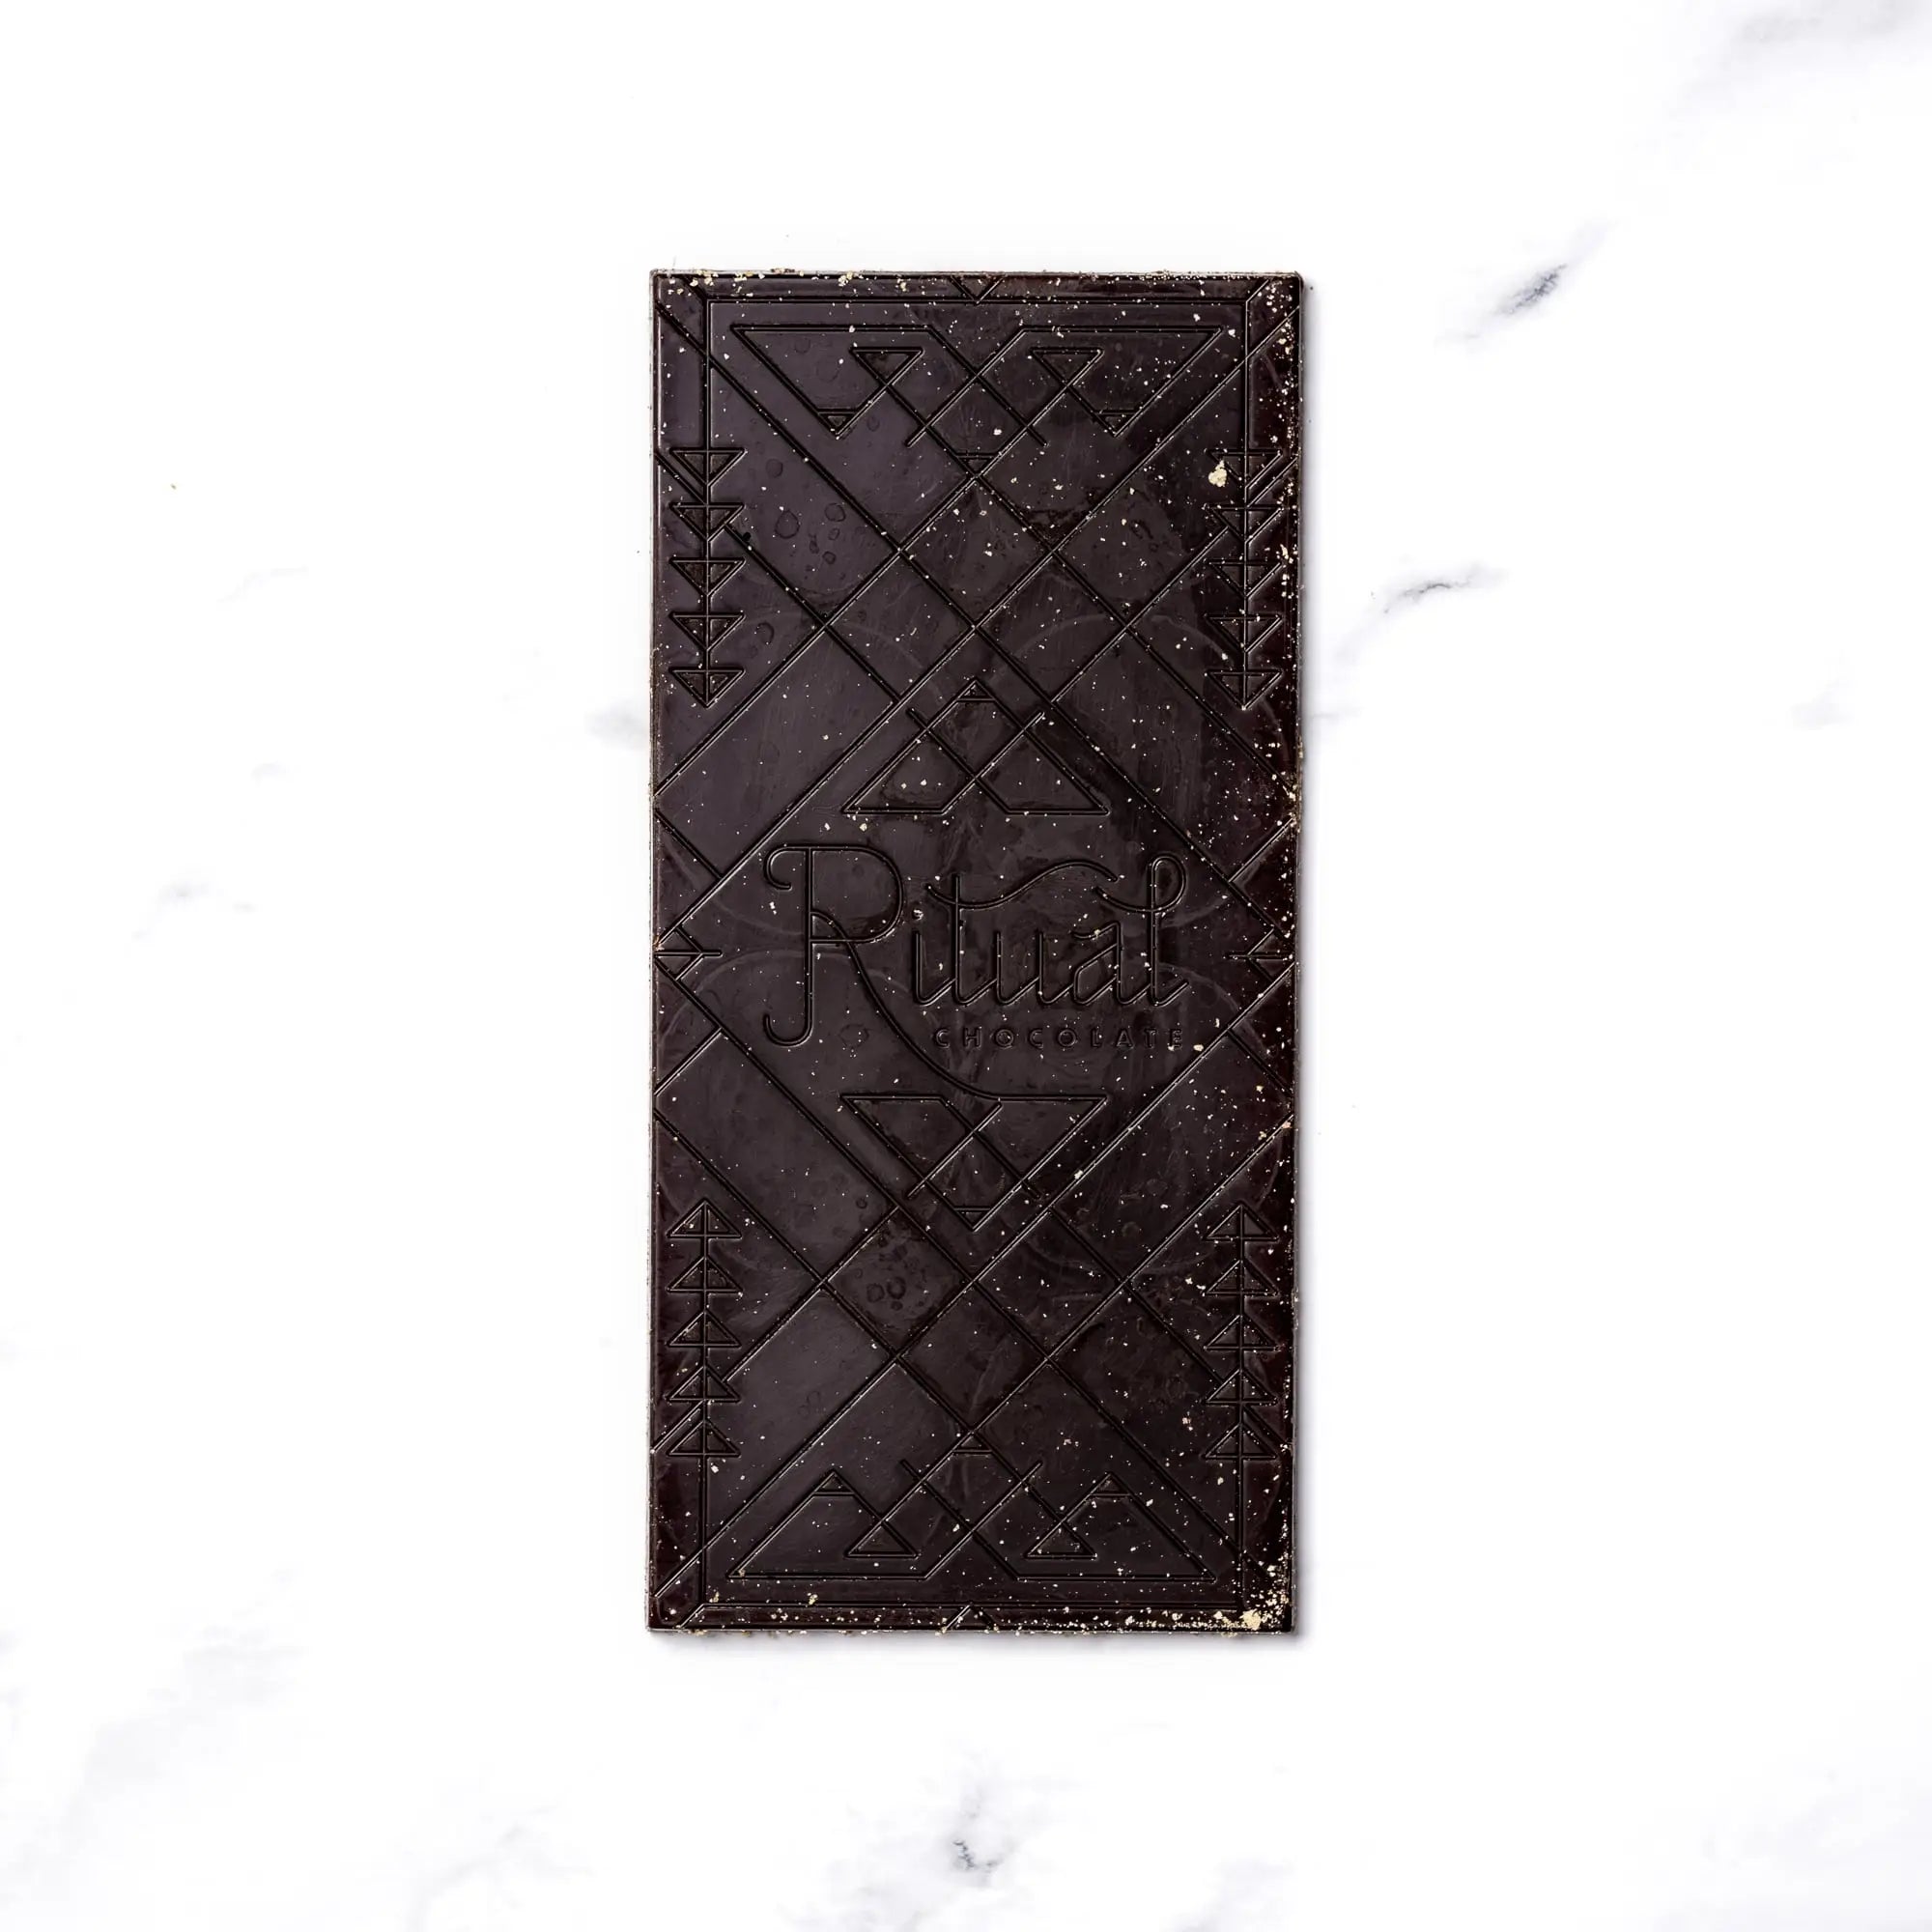 S'mores Bar 70% Chocolate by Ritual Chocolates. Graham Cracker and Caramelized Sugar Dark Chocolate Bar. Organic Chocolate.